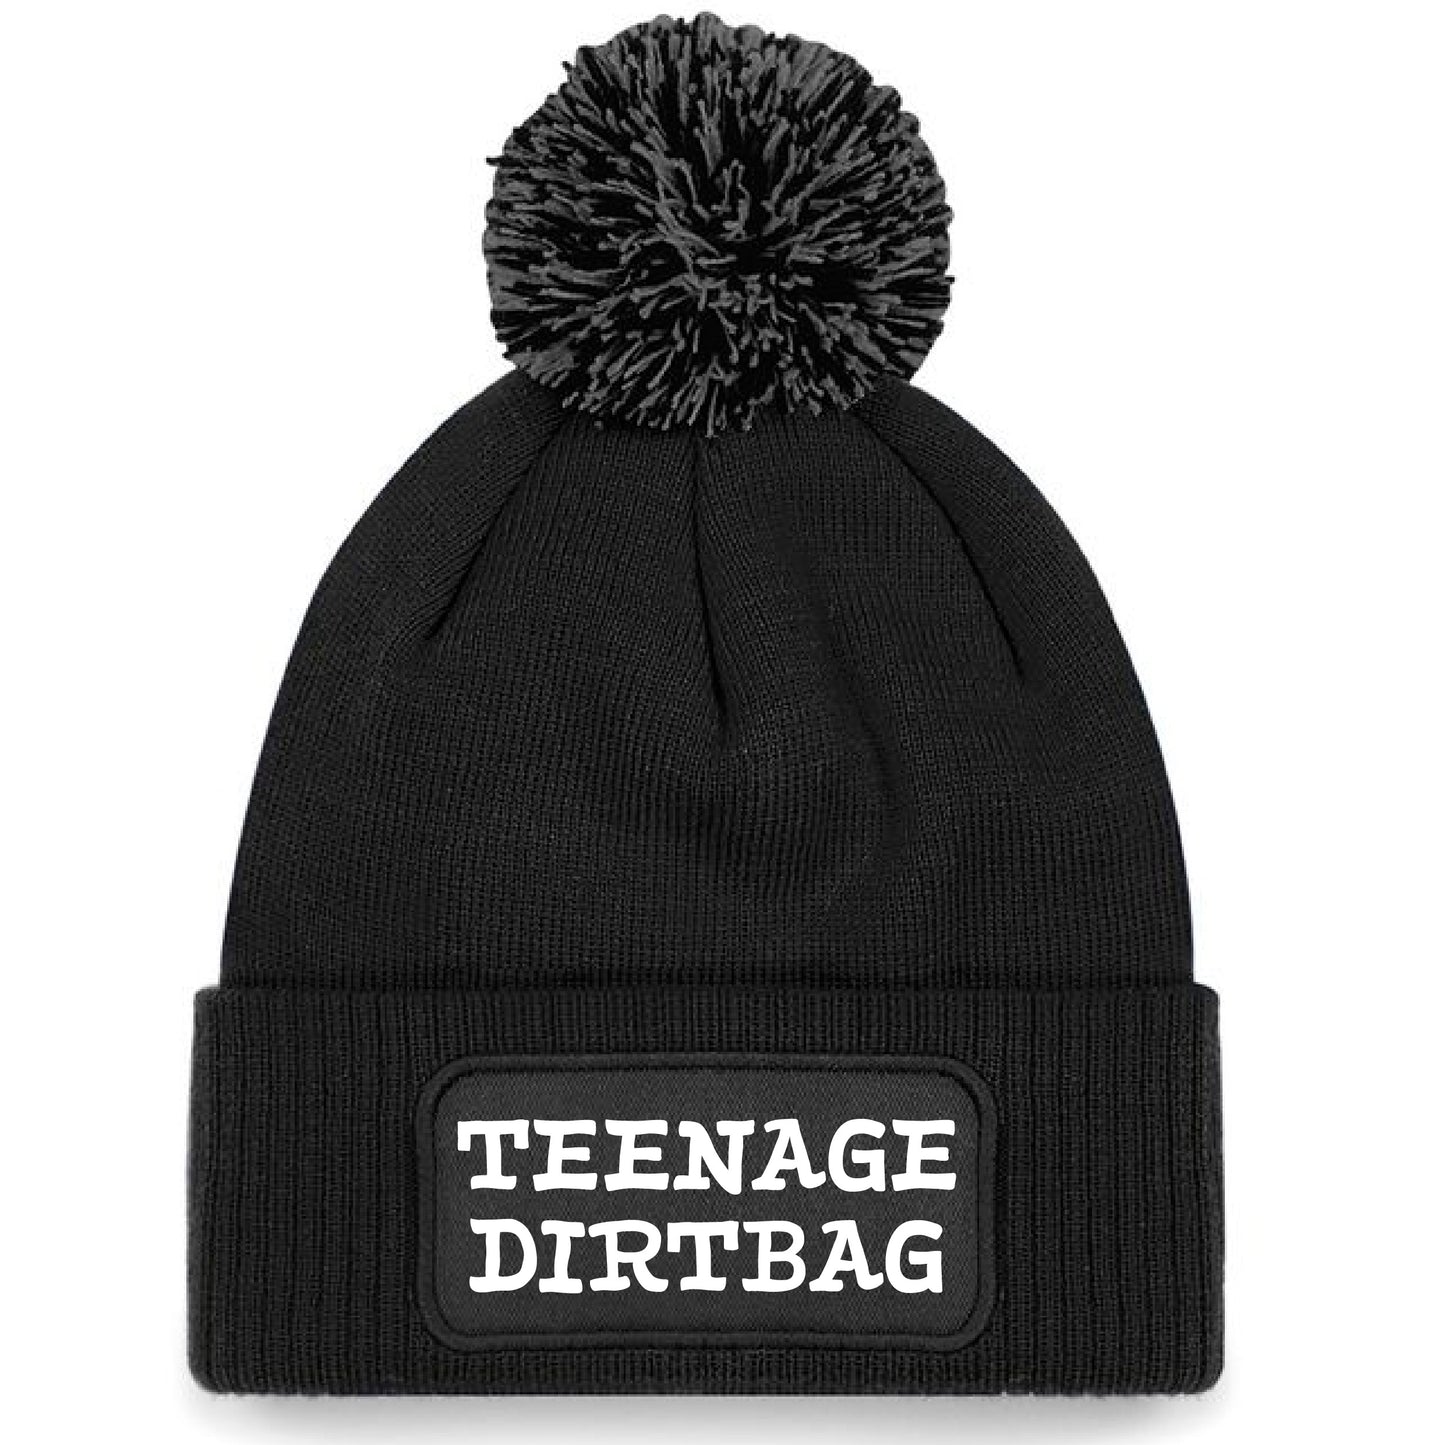 Teenage Dirtbag Beanie Hat